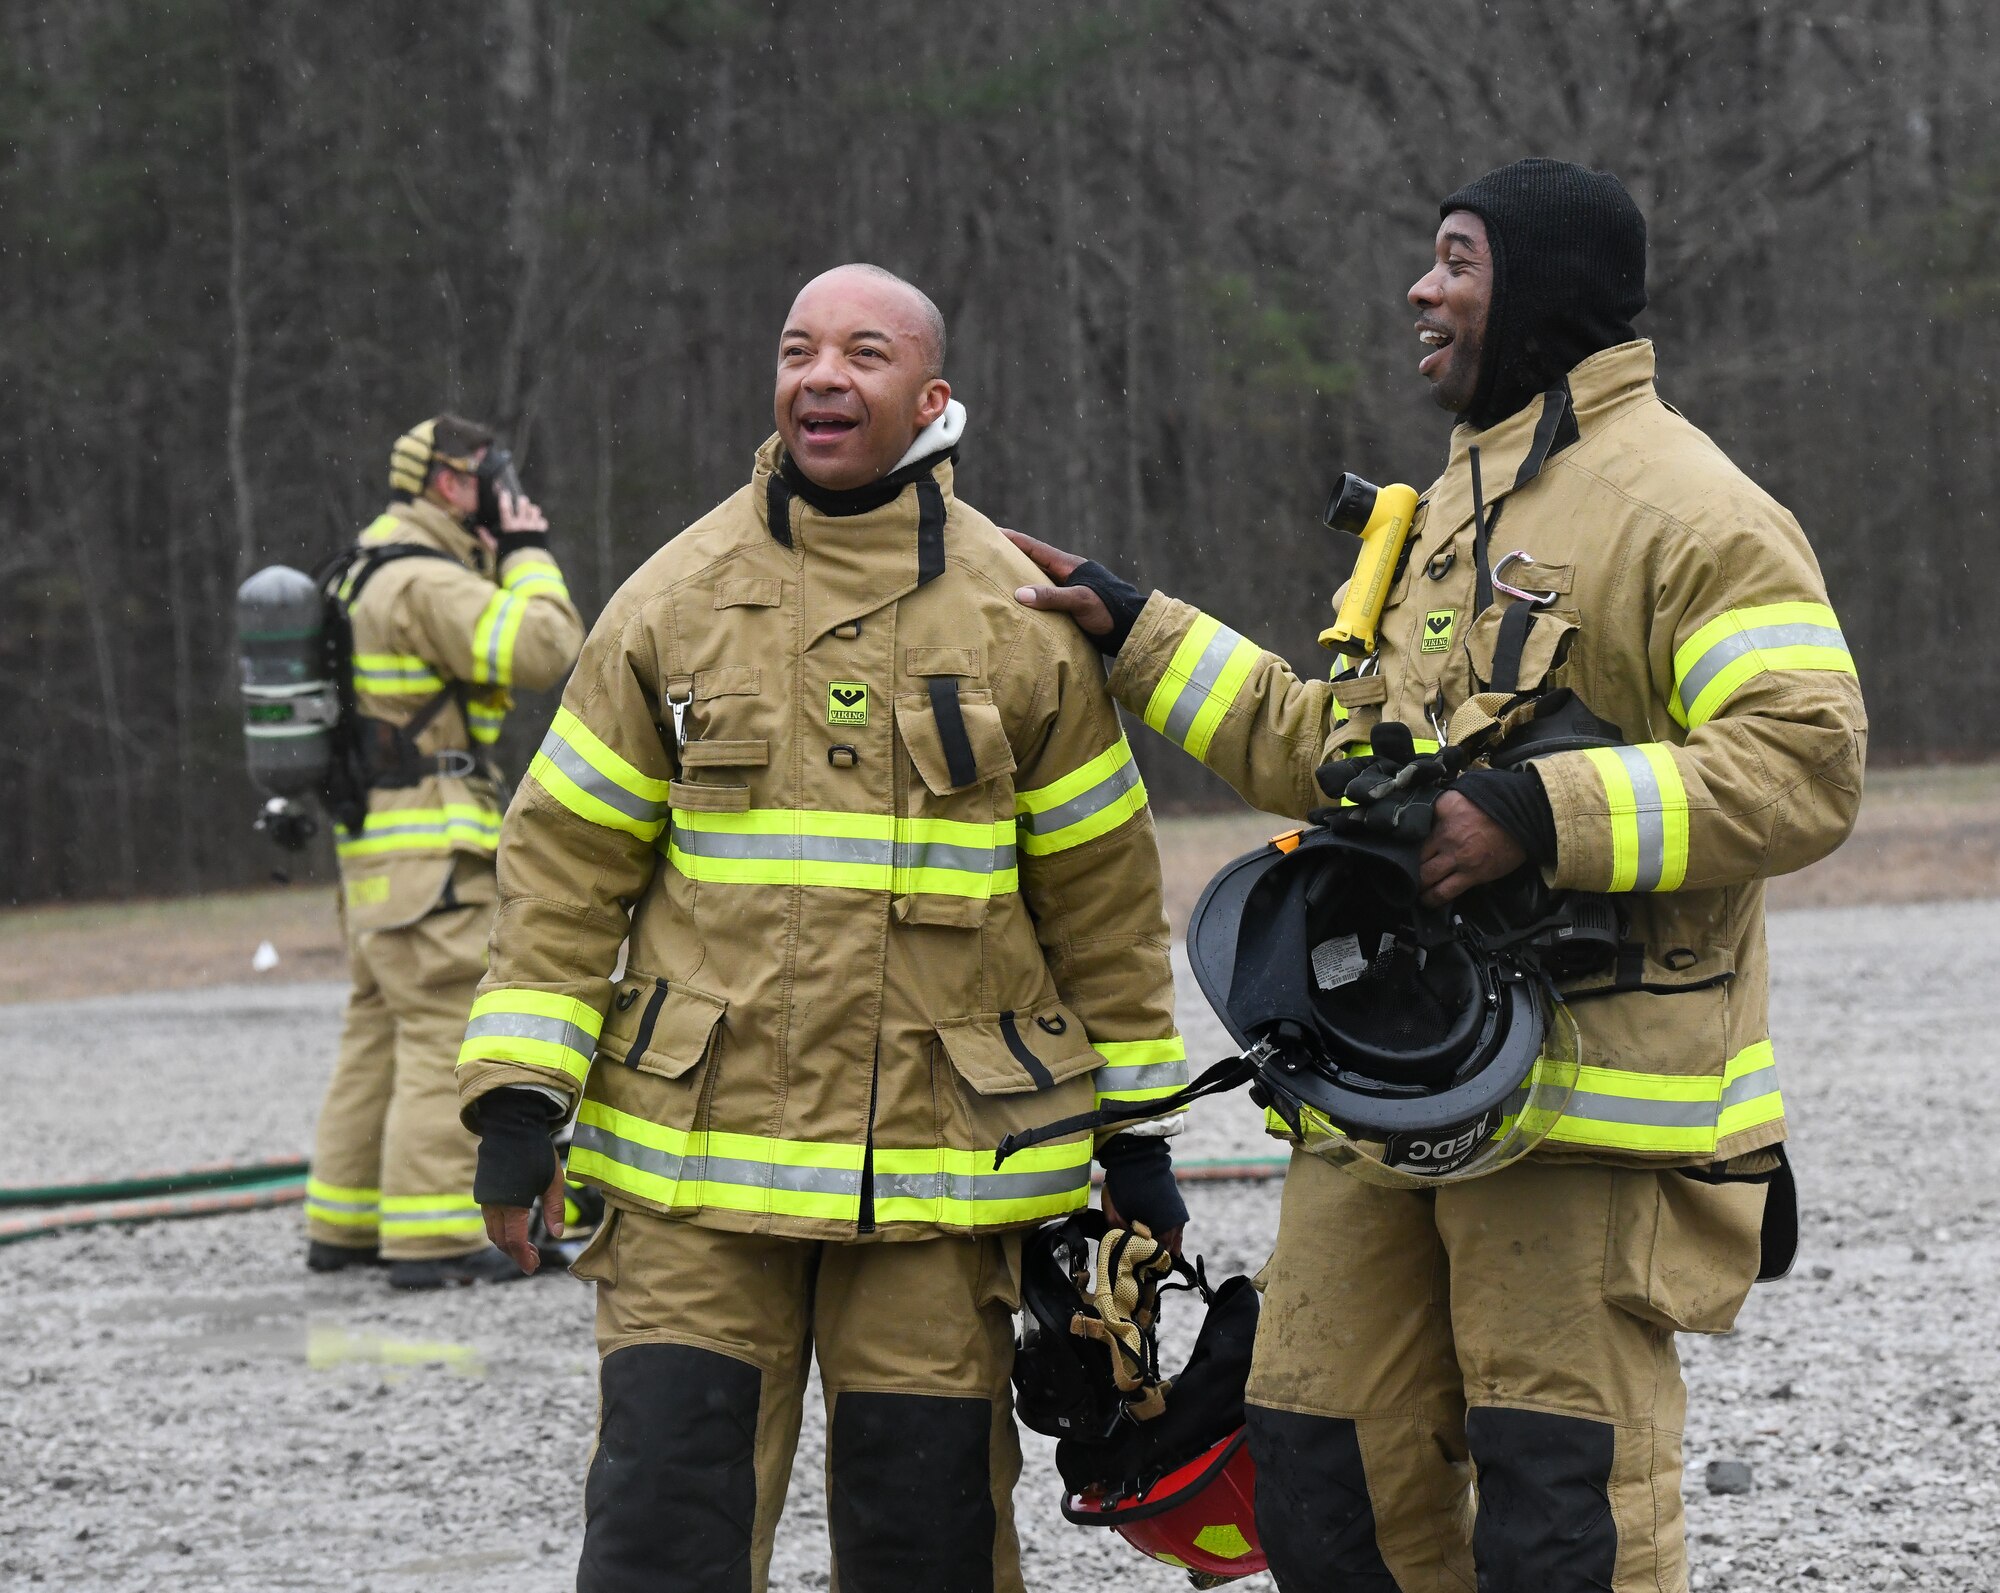 Men in firefighting gear laughing